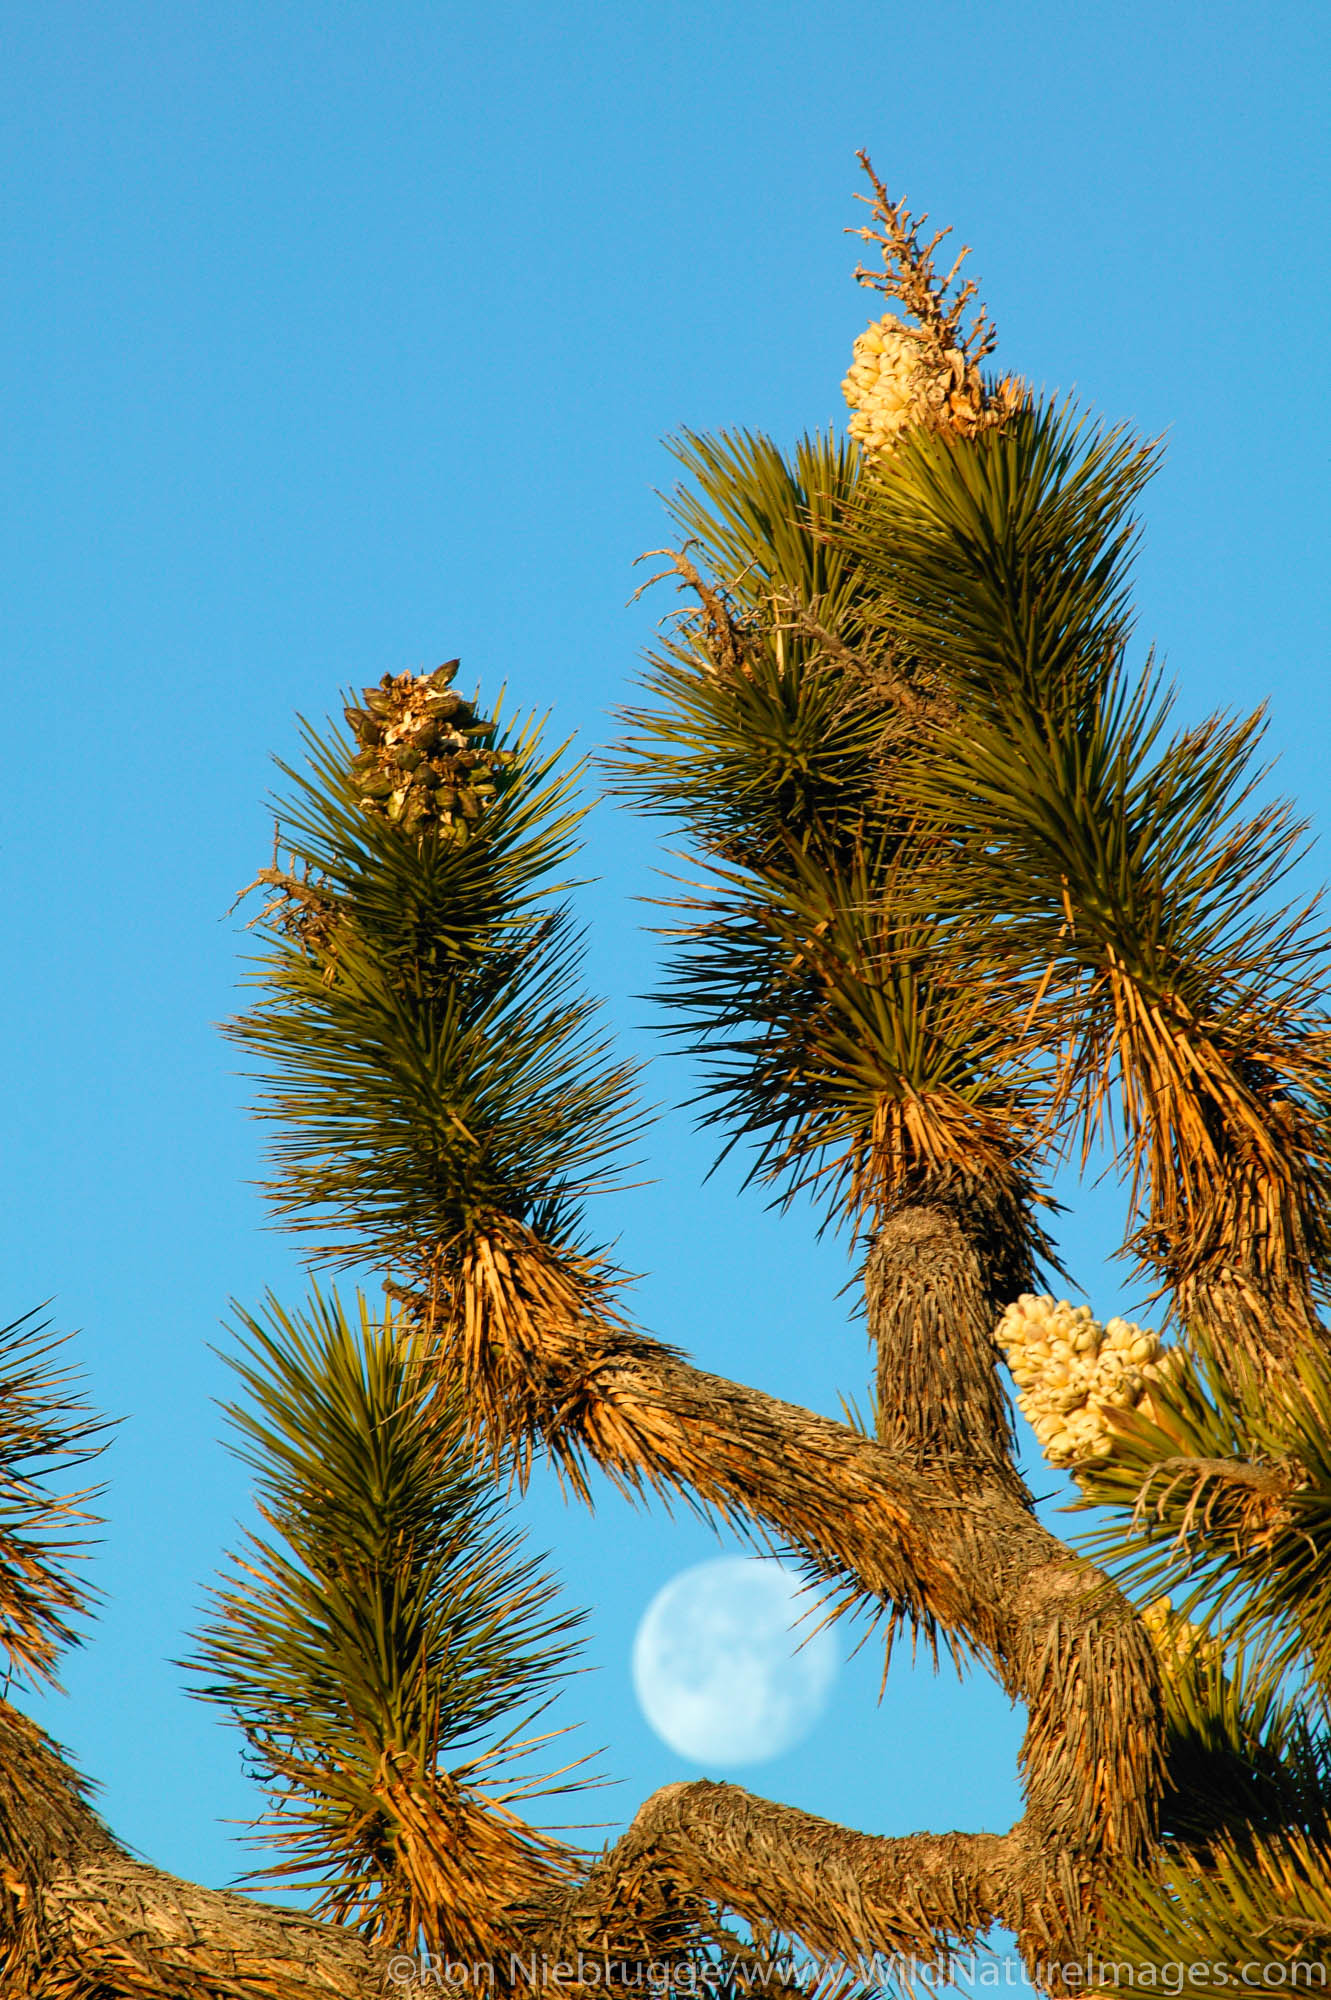 Joshua Tree in bloom with full moon (Yucca brevifolia). Mojave Desert, Pioneertown, California.